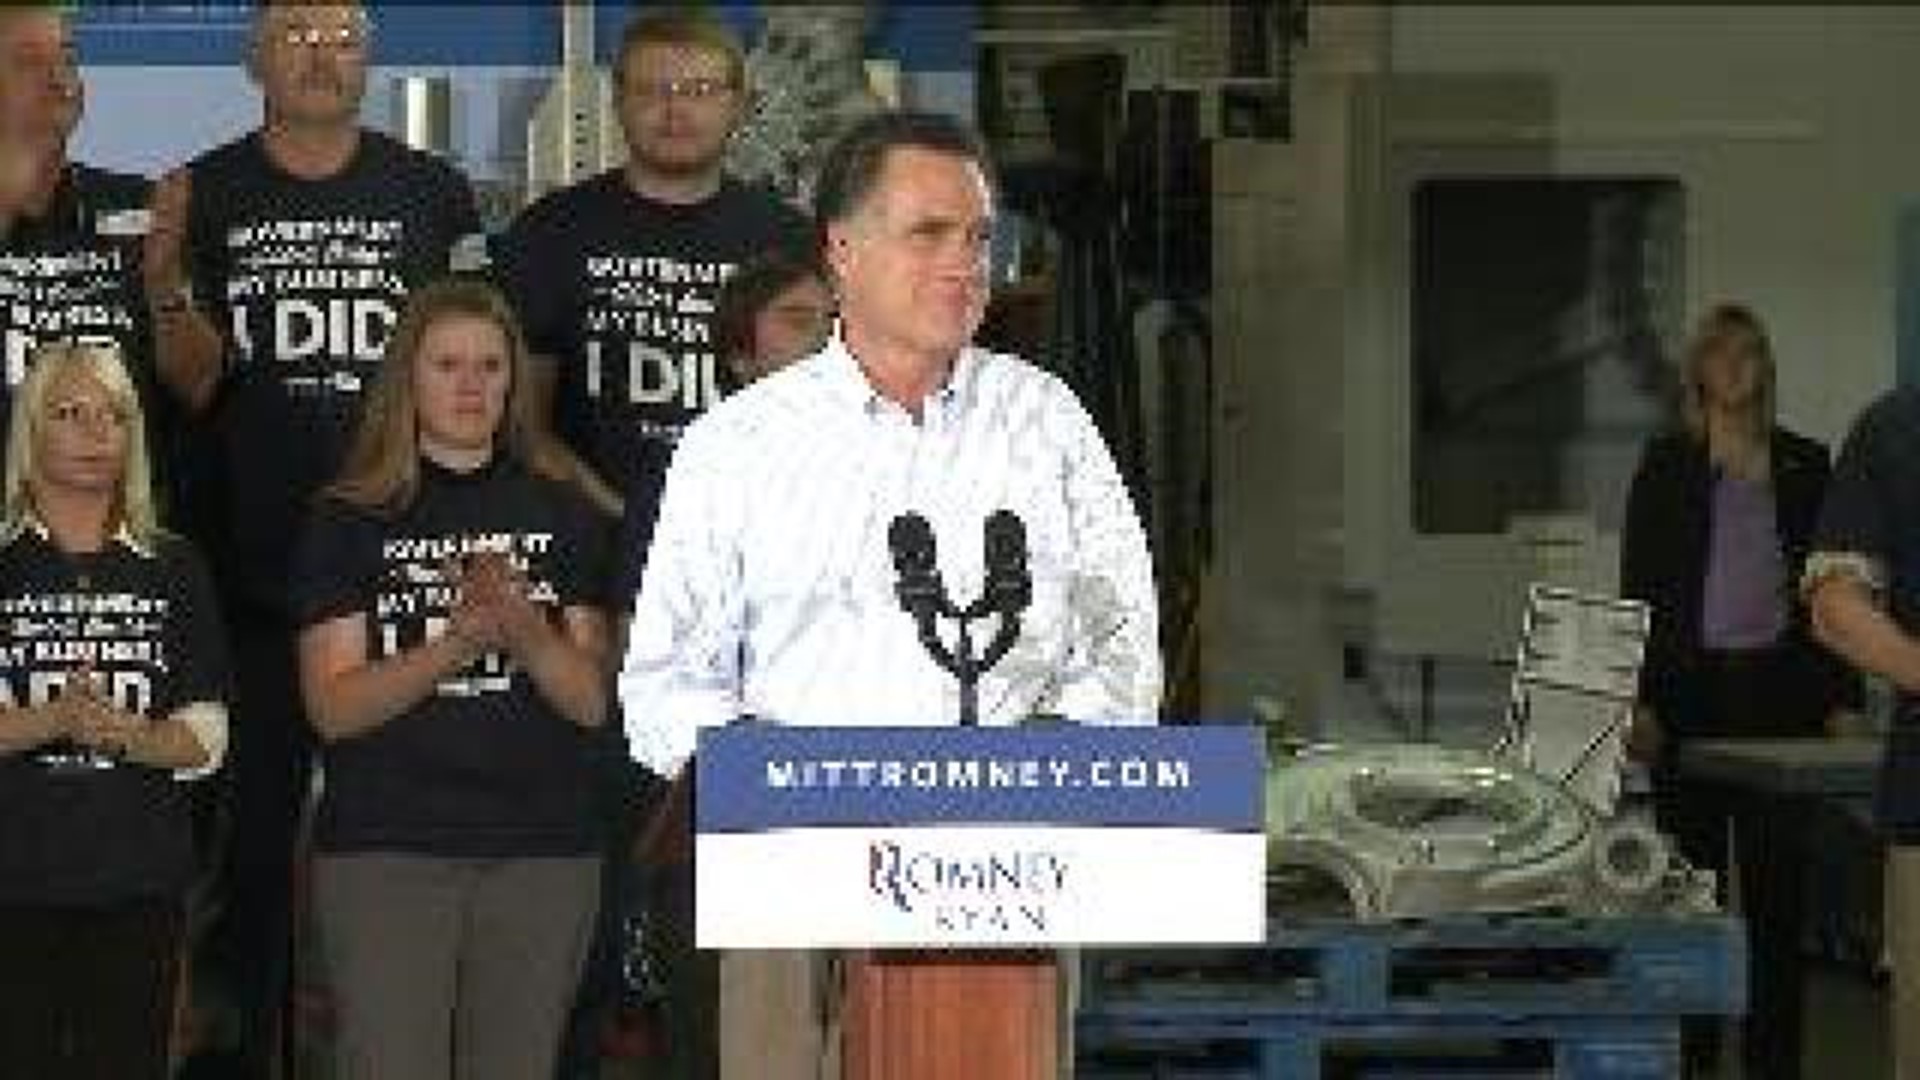 Mitt Romney in Bettendorf Clip 1 of 3